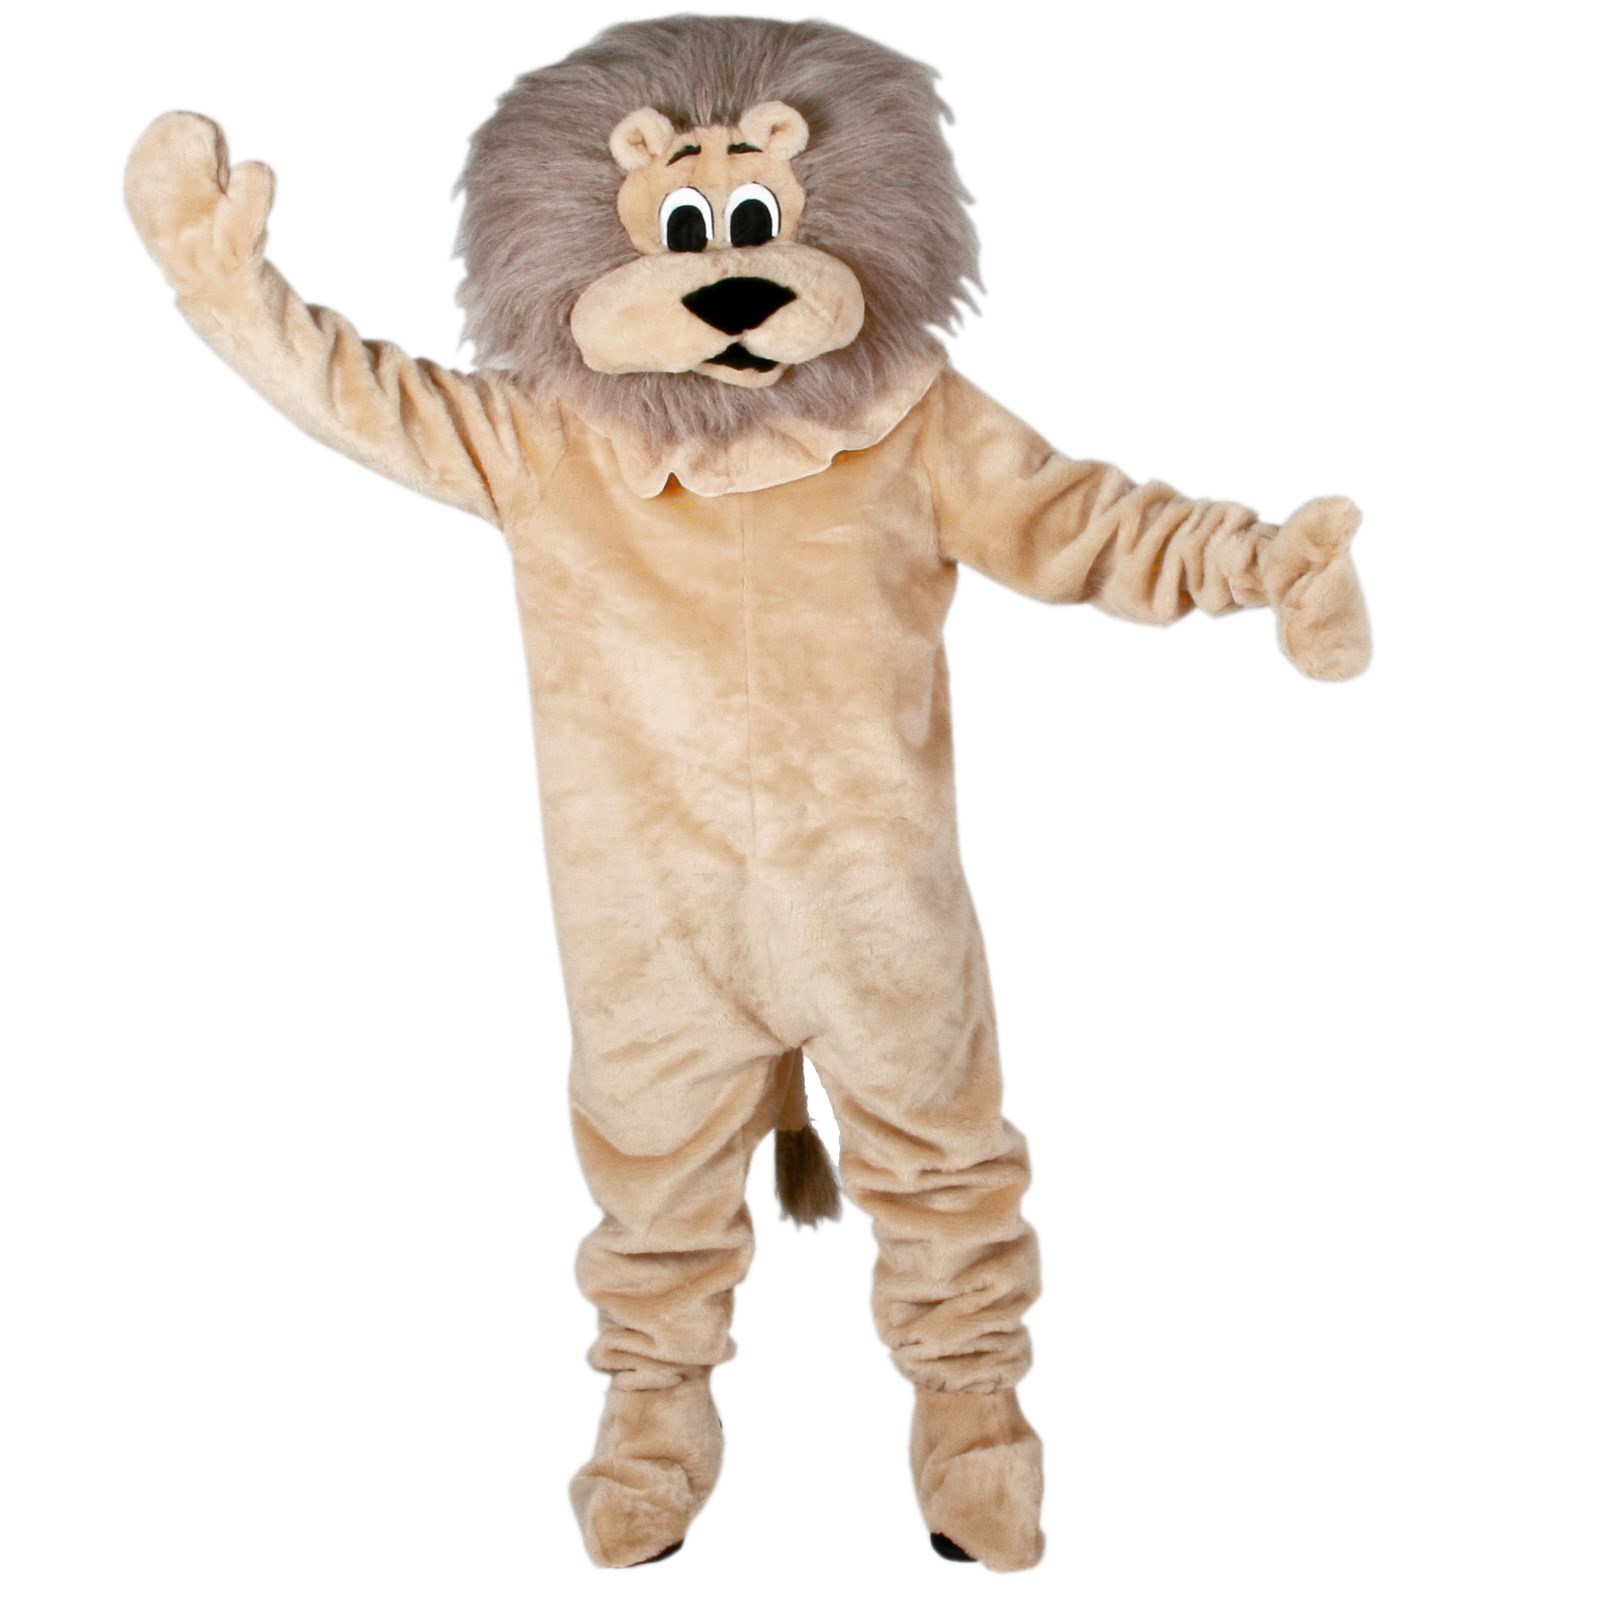 Lyman Lion Economy Mascot Adult